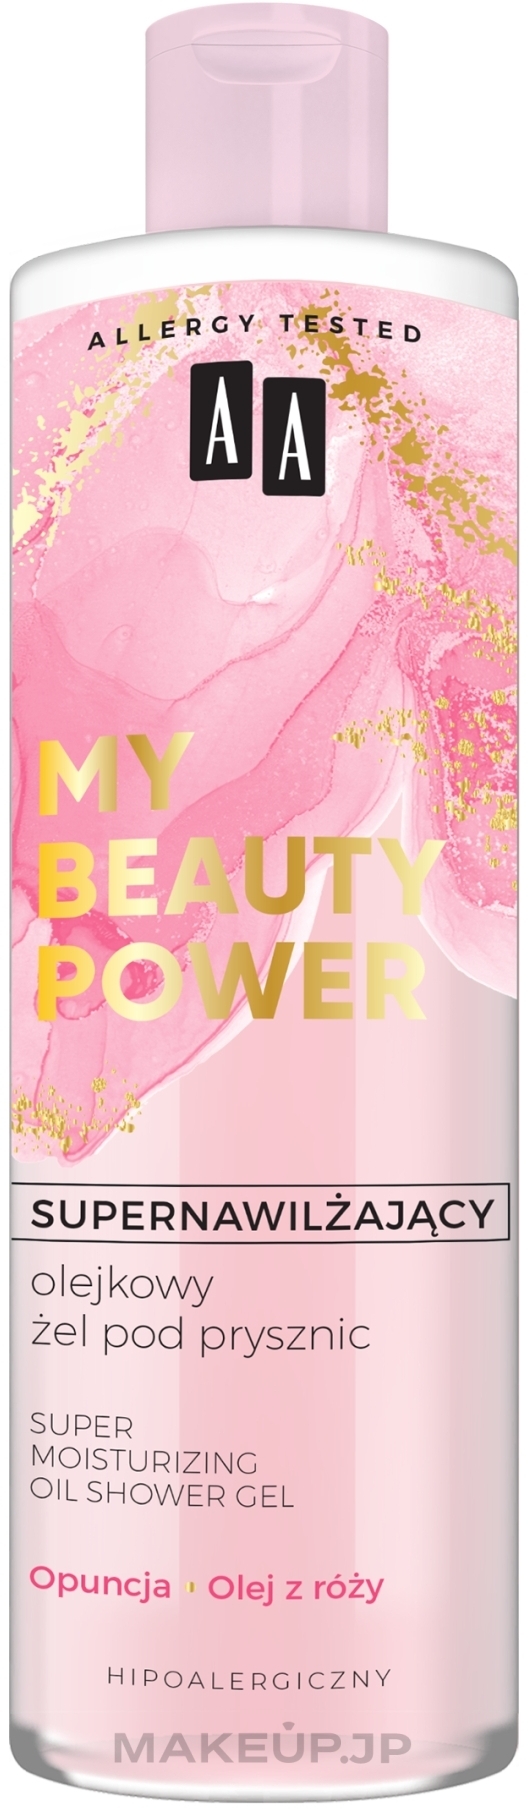 Super Moisturizing Opuntia & Rose Shower Oil - AA My Beauty Power Super Moisturizing Shower Oil — photo 400 ml